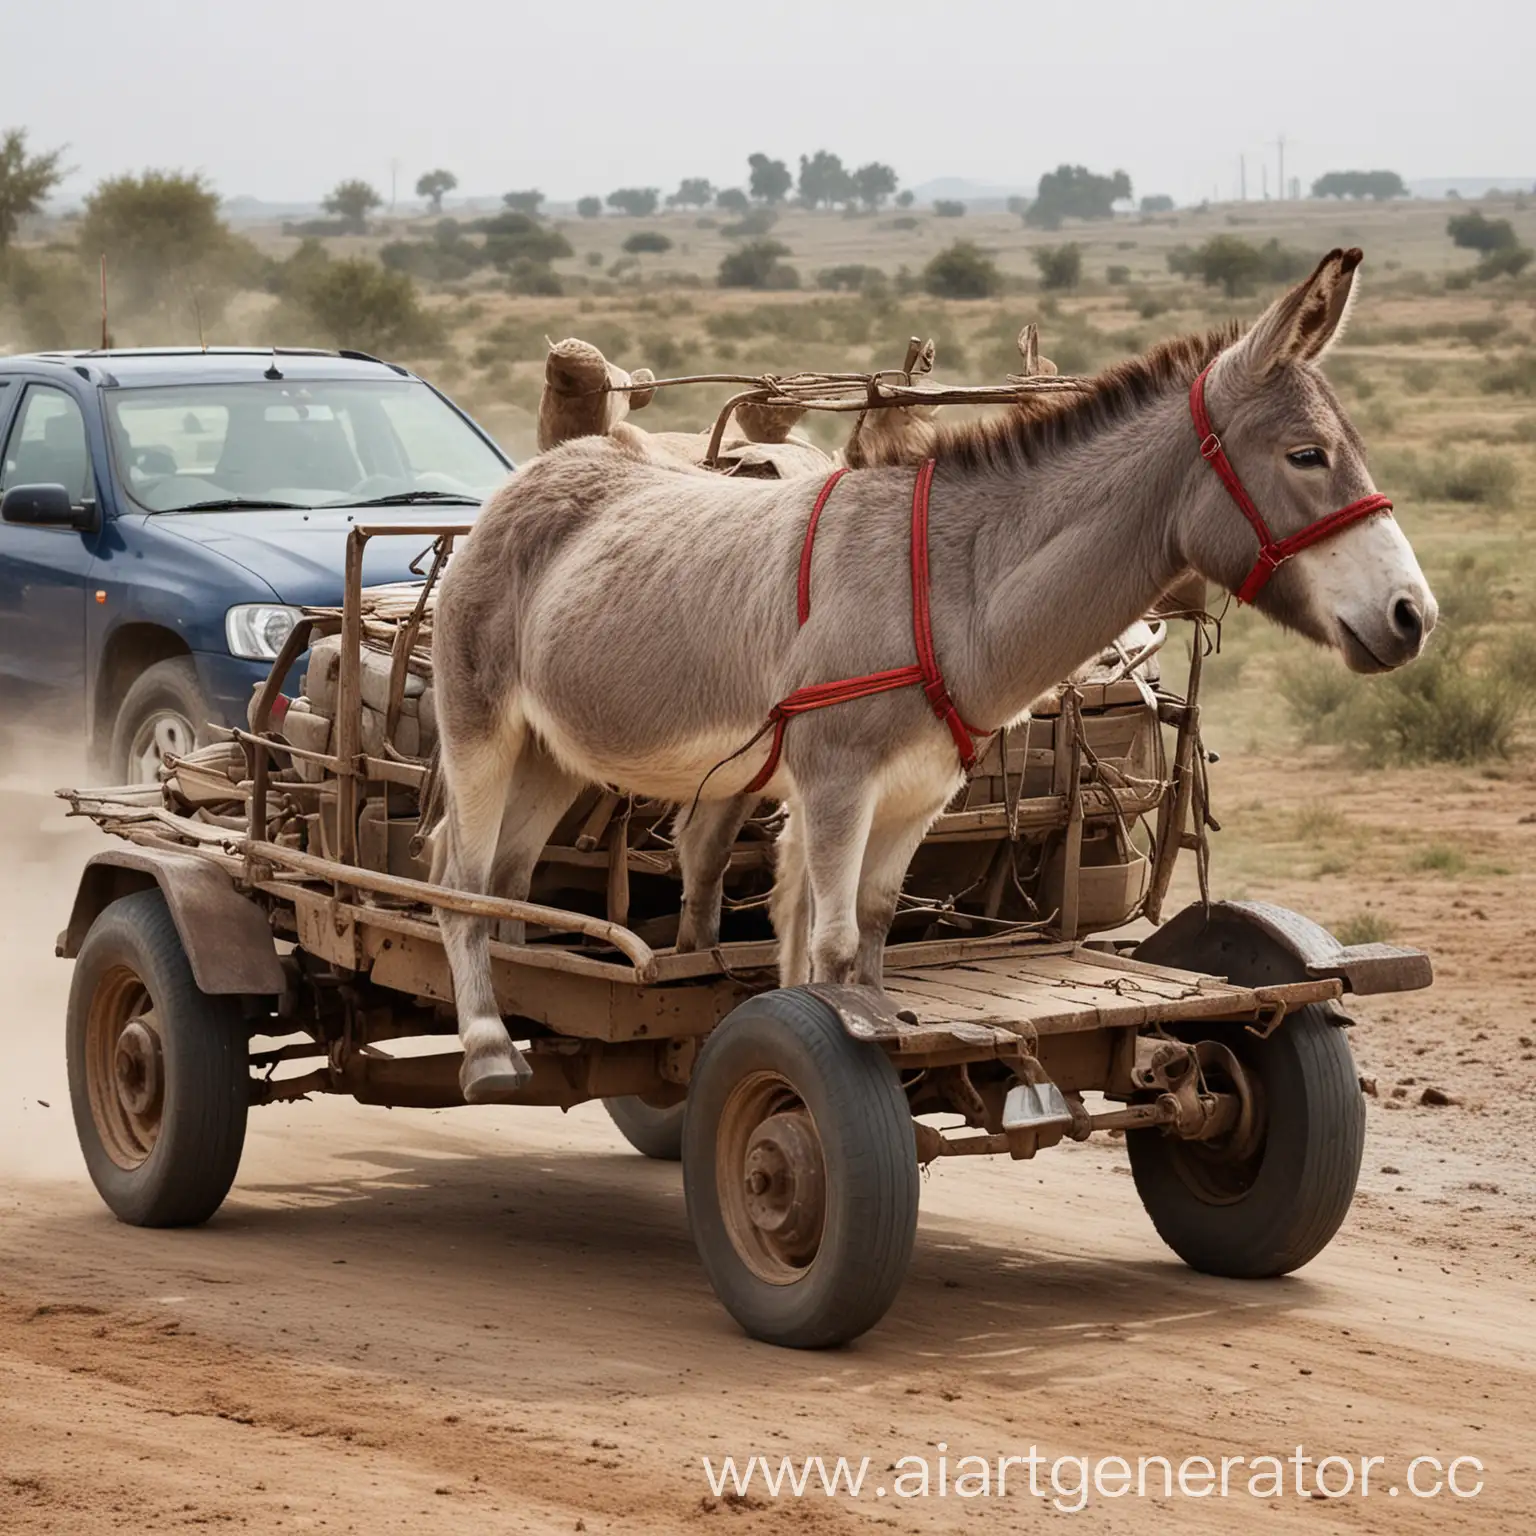 Donkey-Driving-Car-in-Rural-Setting